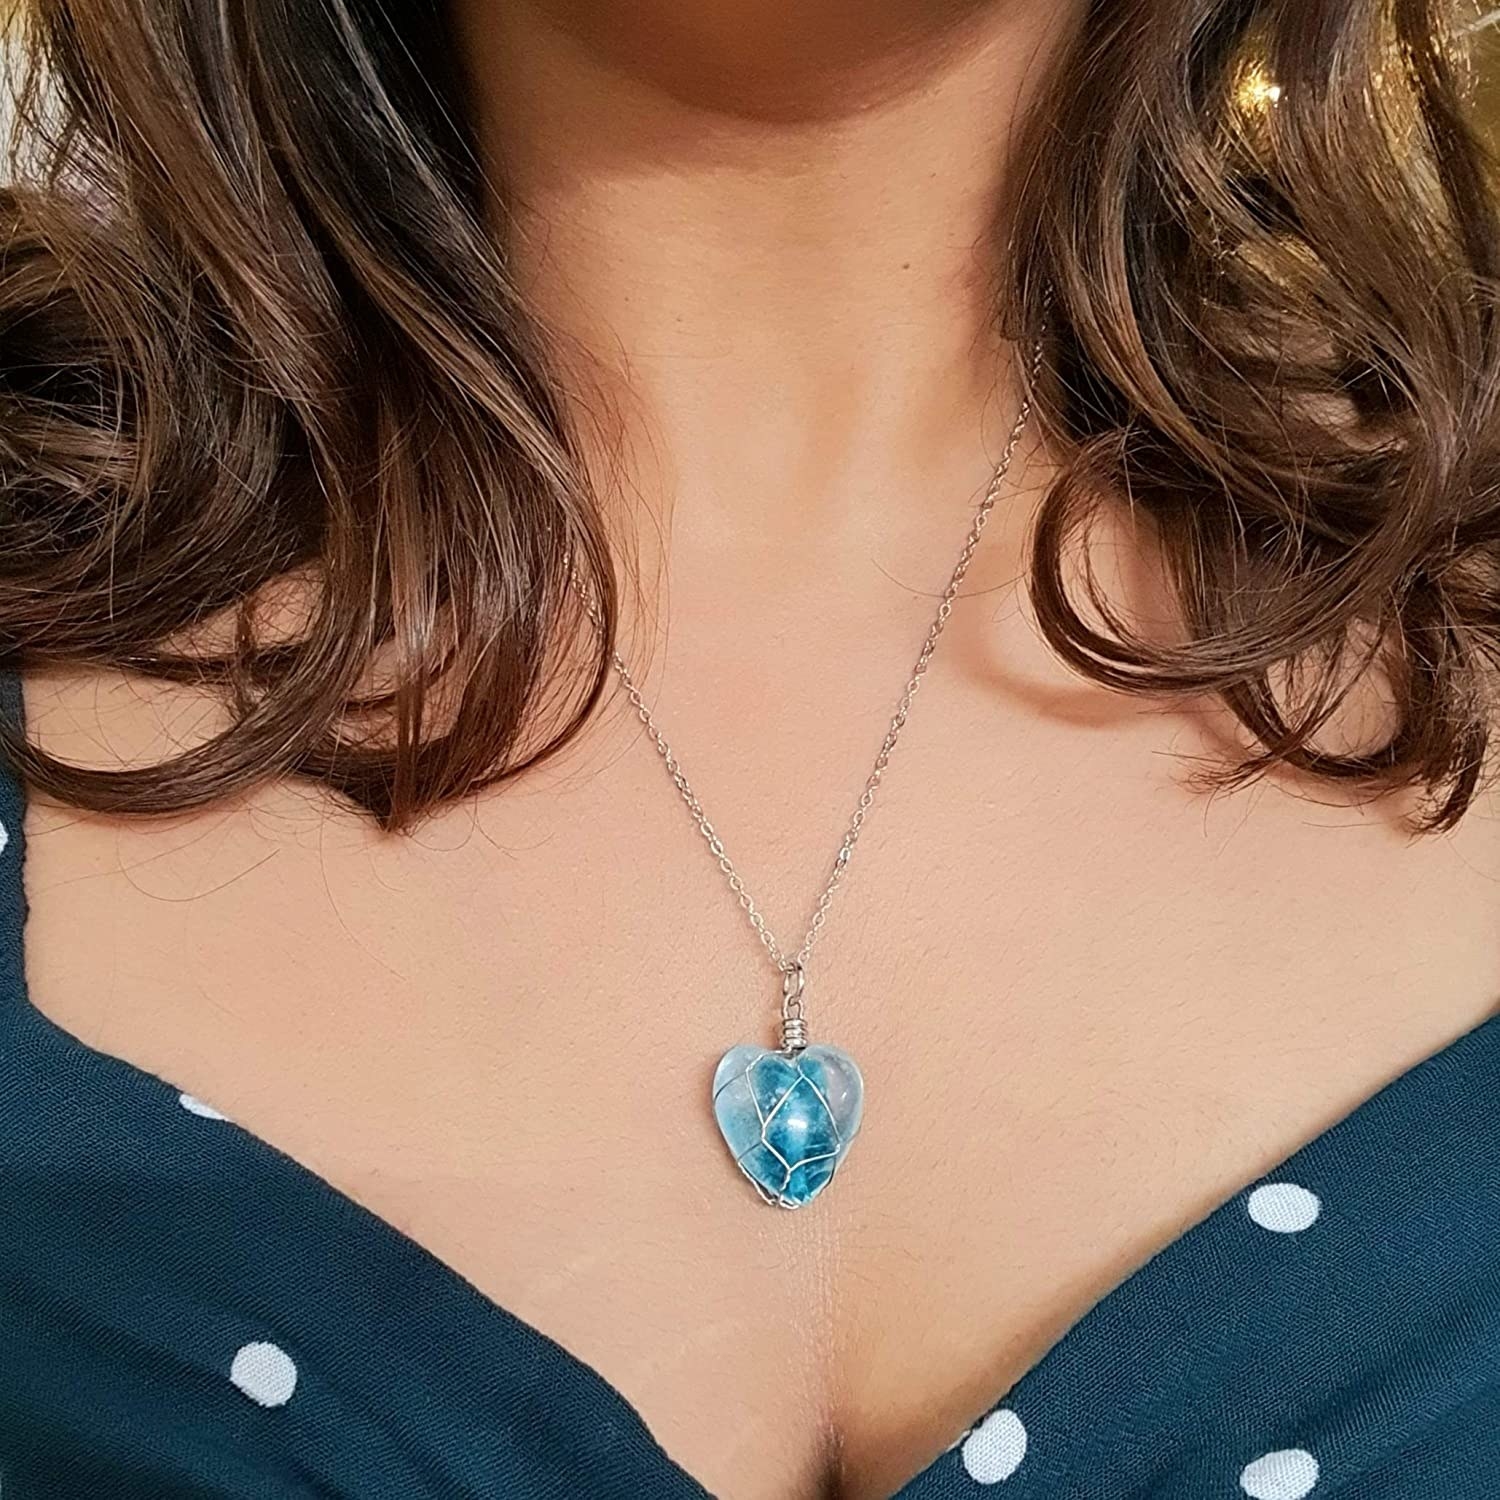 A woman wearing a heart shaped blue pendant.